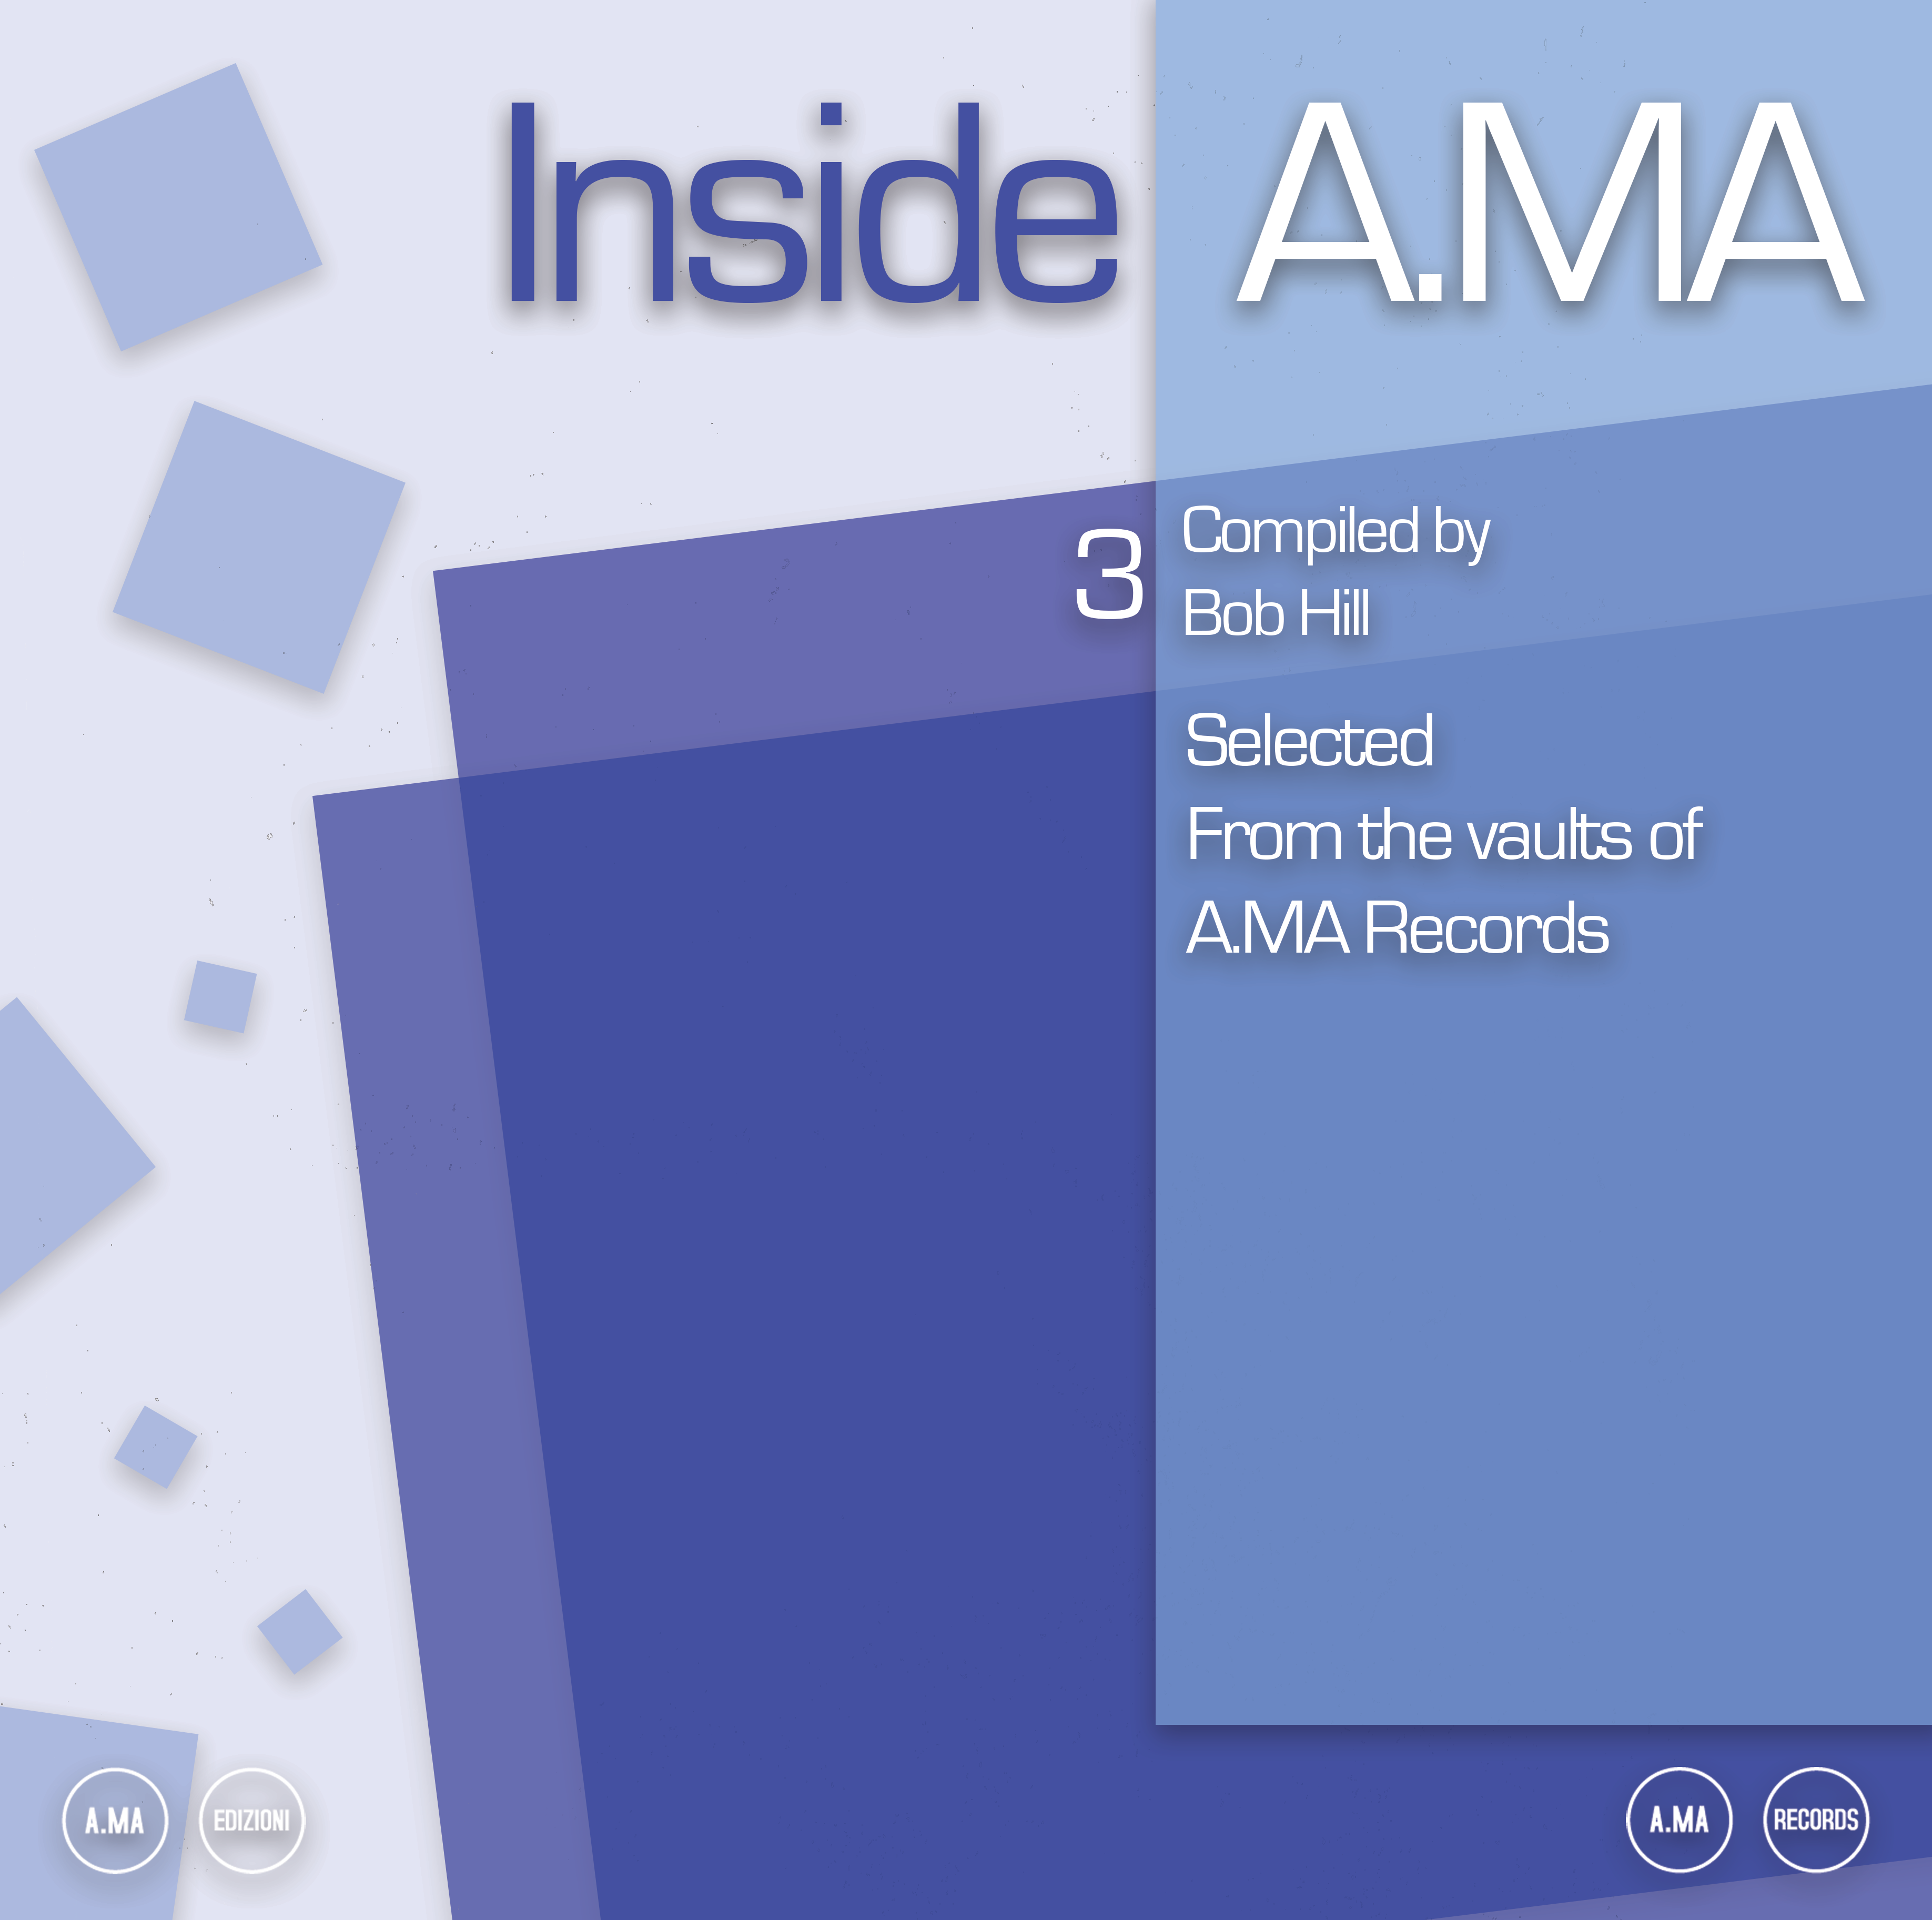 Inside A.MA volume 3 Cover Art